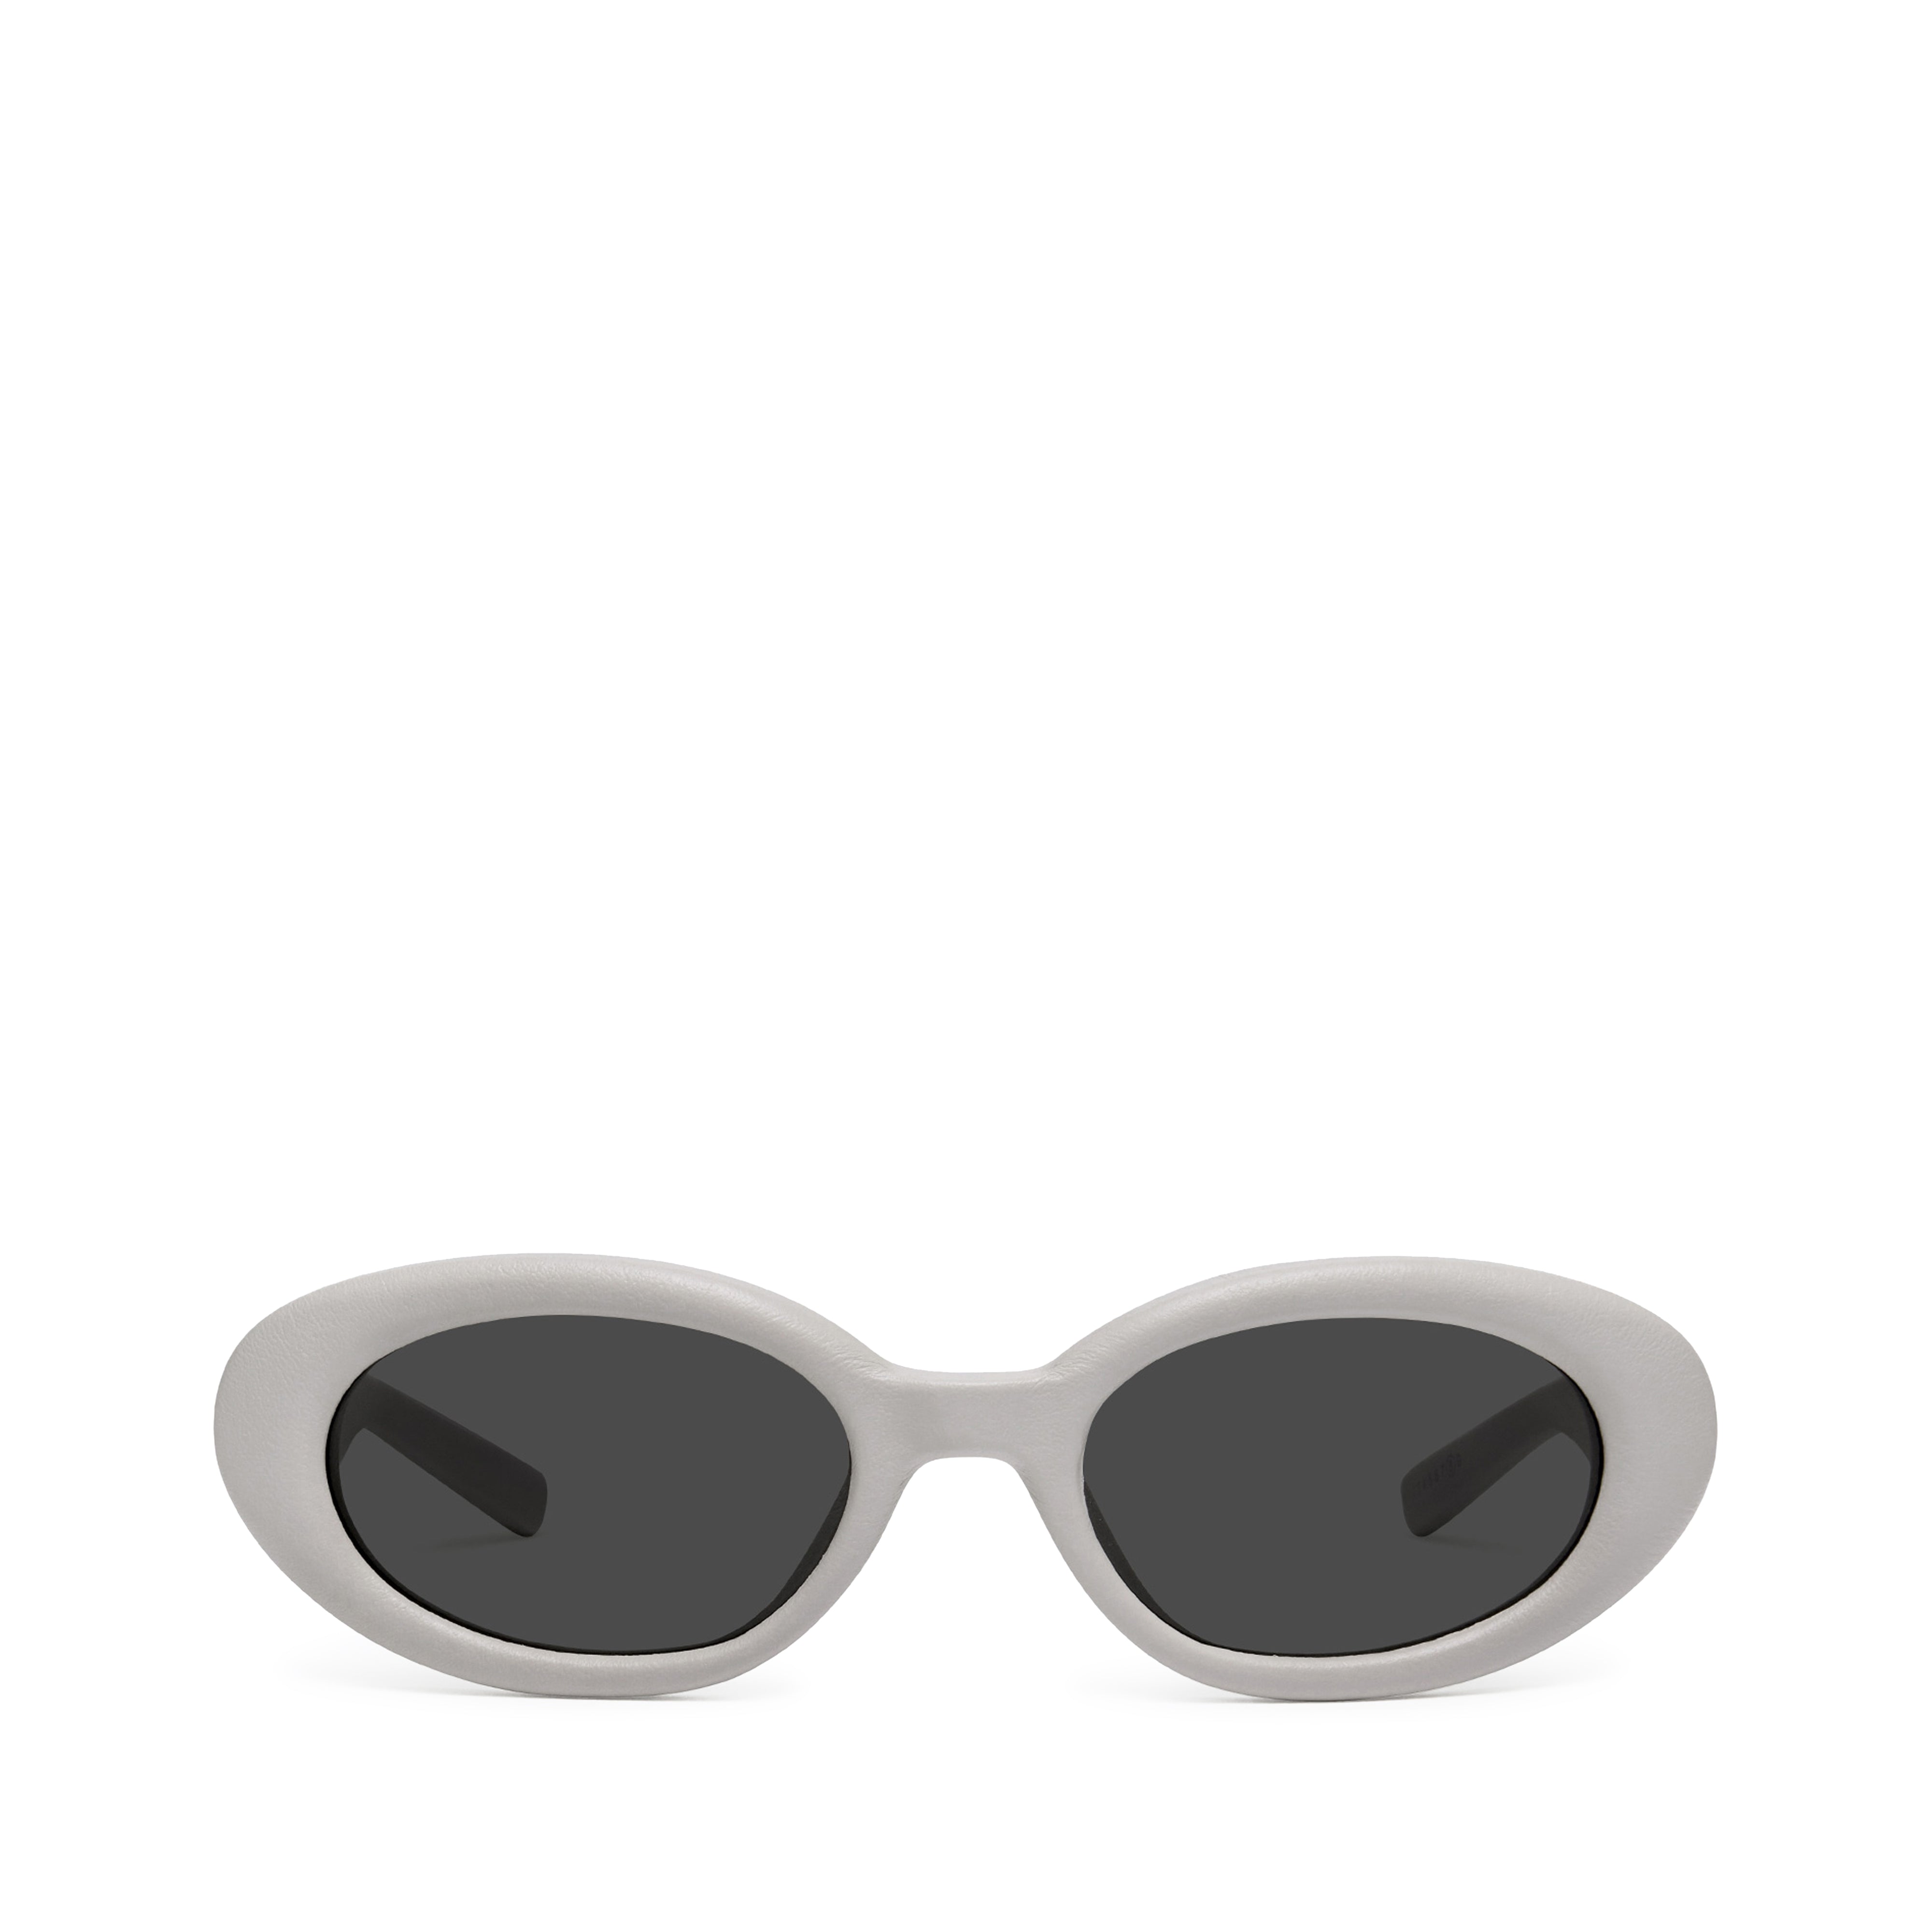 Maison Margiela x Gentle Monster - MM107 Leather-LIV1 Sunglasses - (White)